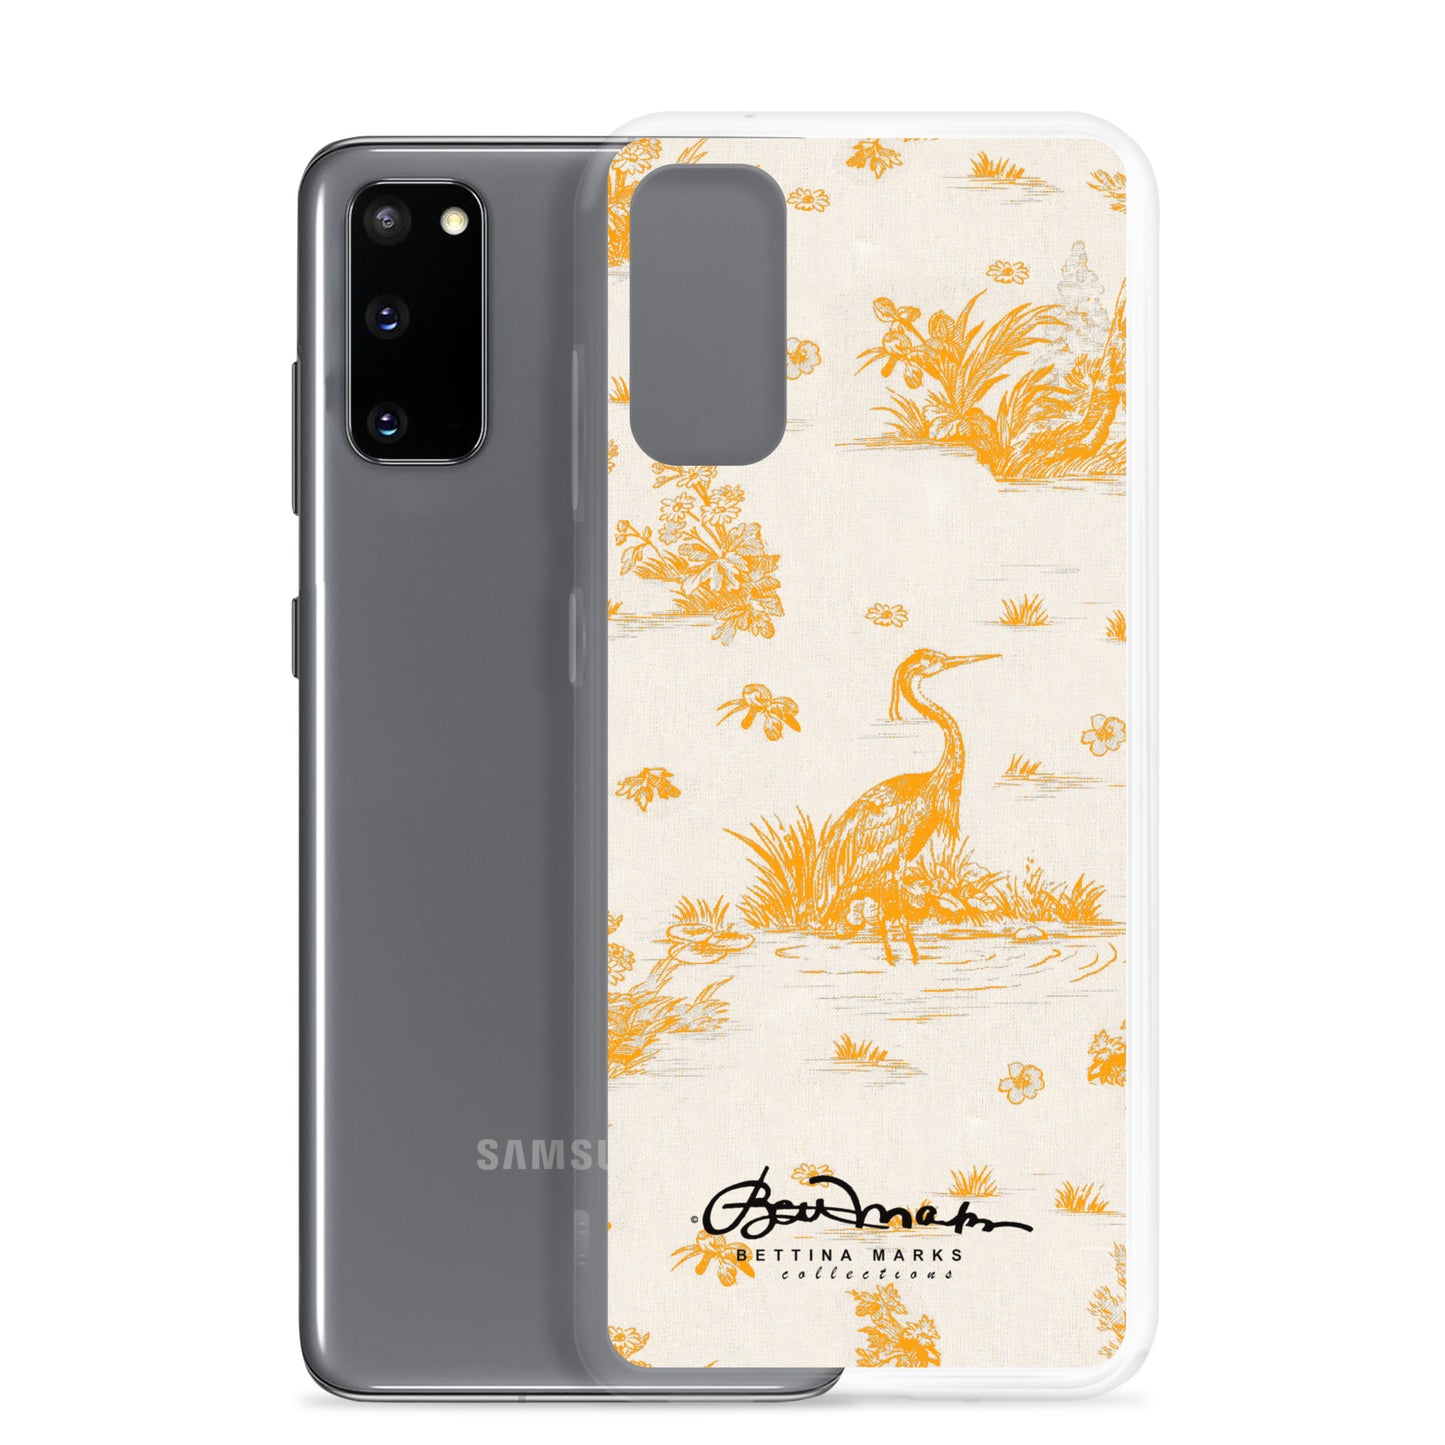 Toiles de Jouy Sacral Orange Samsung Case (select model)